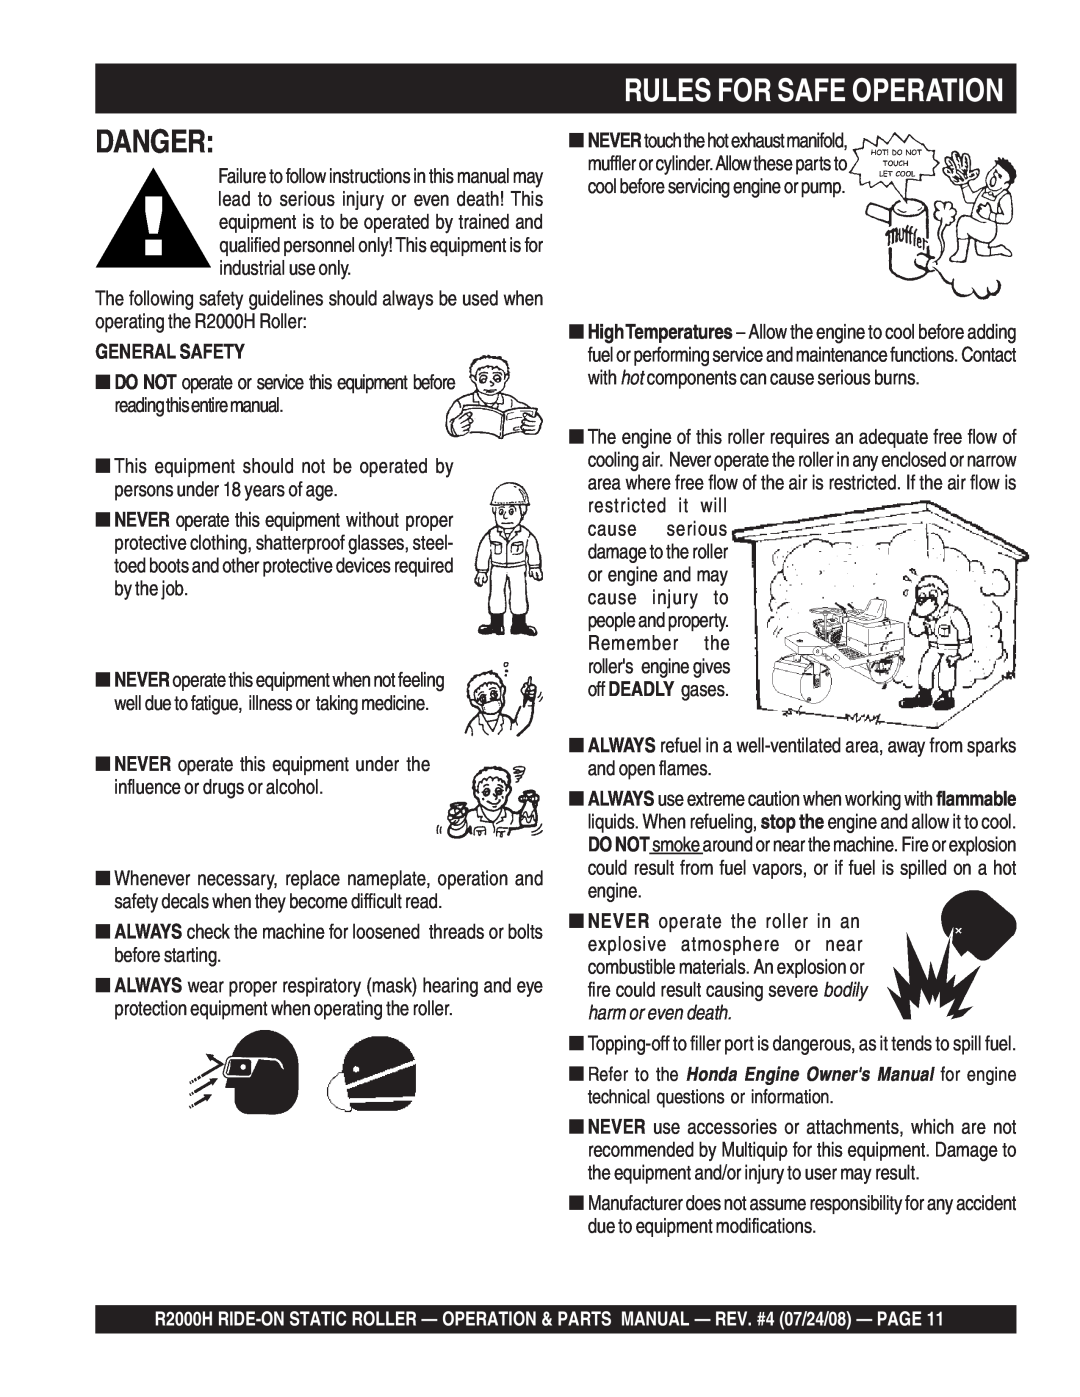 Multiquip R2000H manual Danger, Rules For Safe Operation, General Safety 